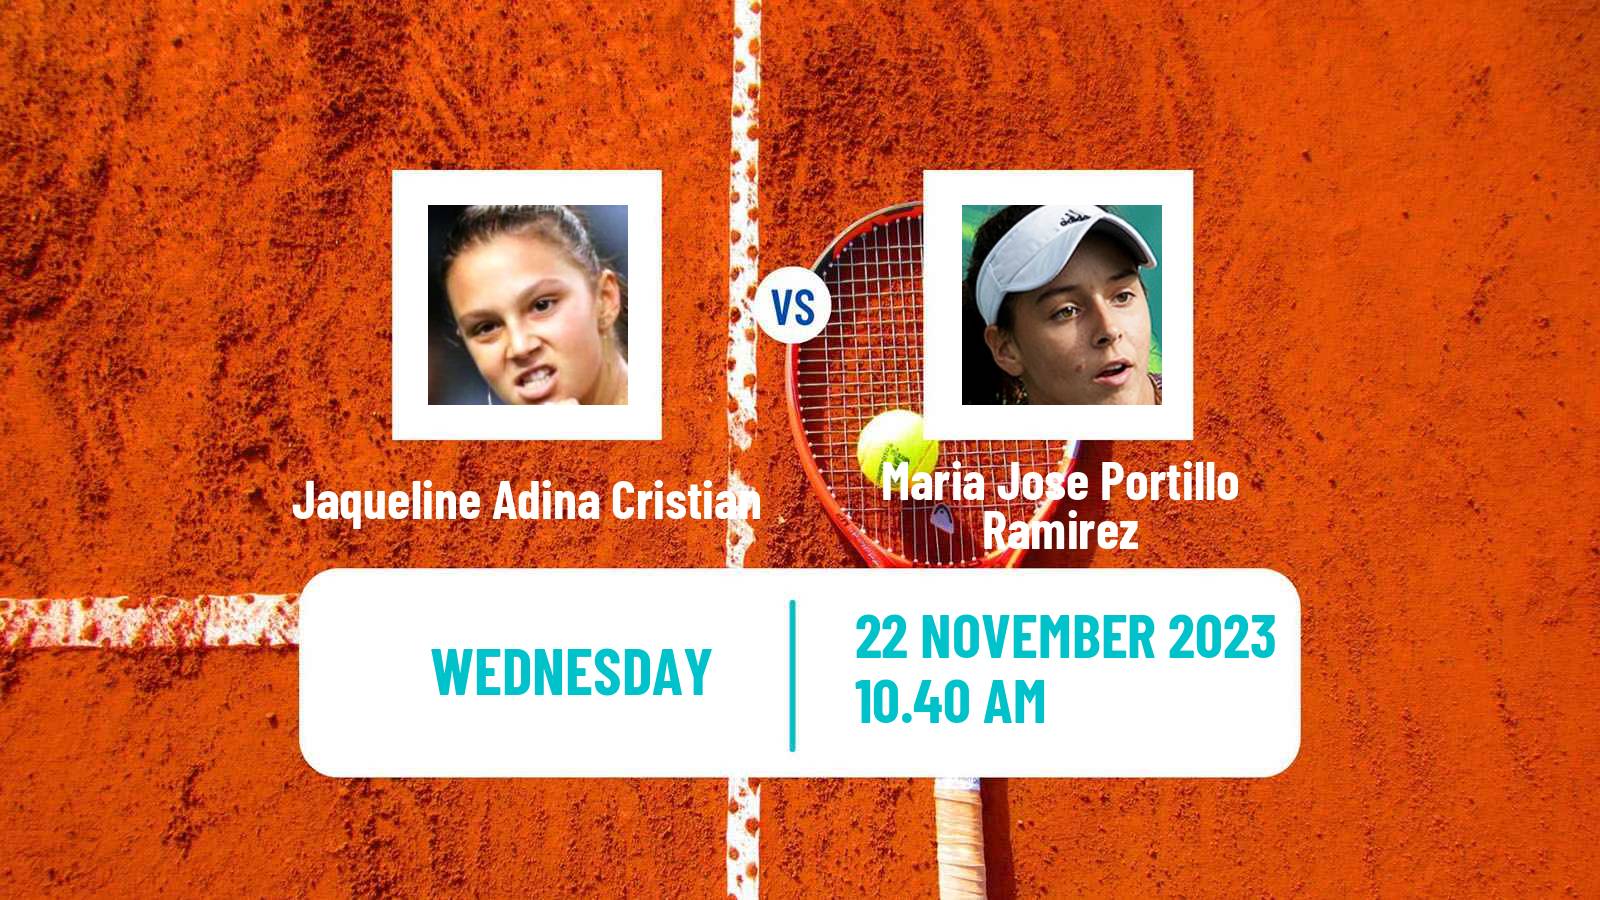 Tennis ITF W100 Valencia Women Jaqueline Adina Cristian - Maria Jose Portillo Ramirez